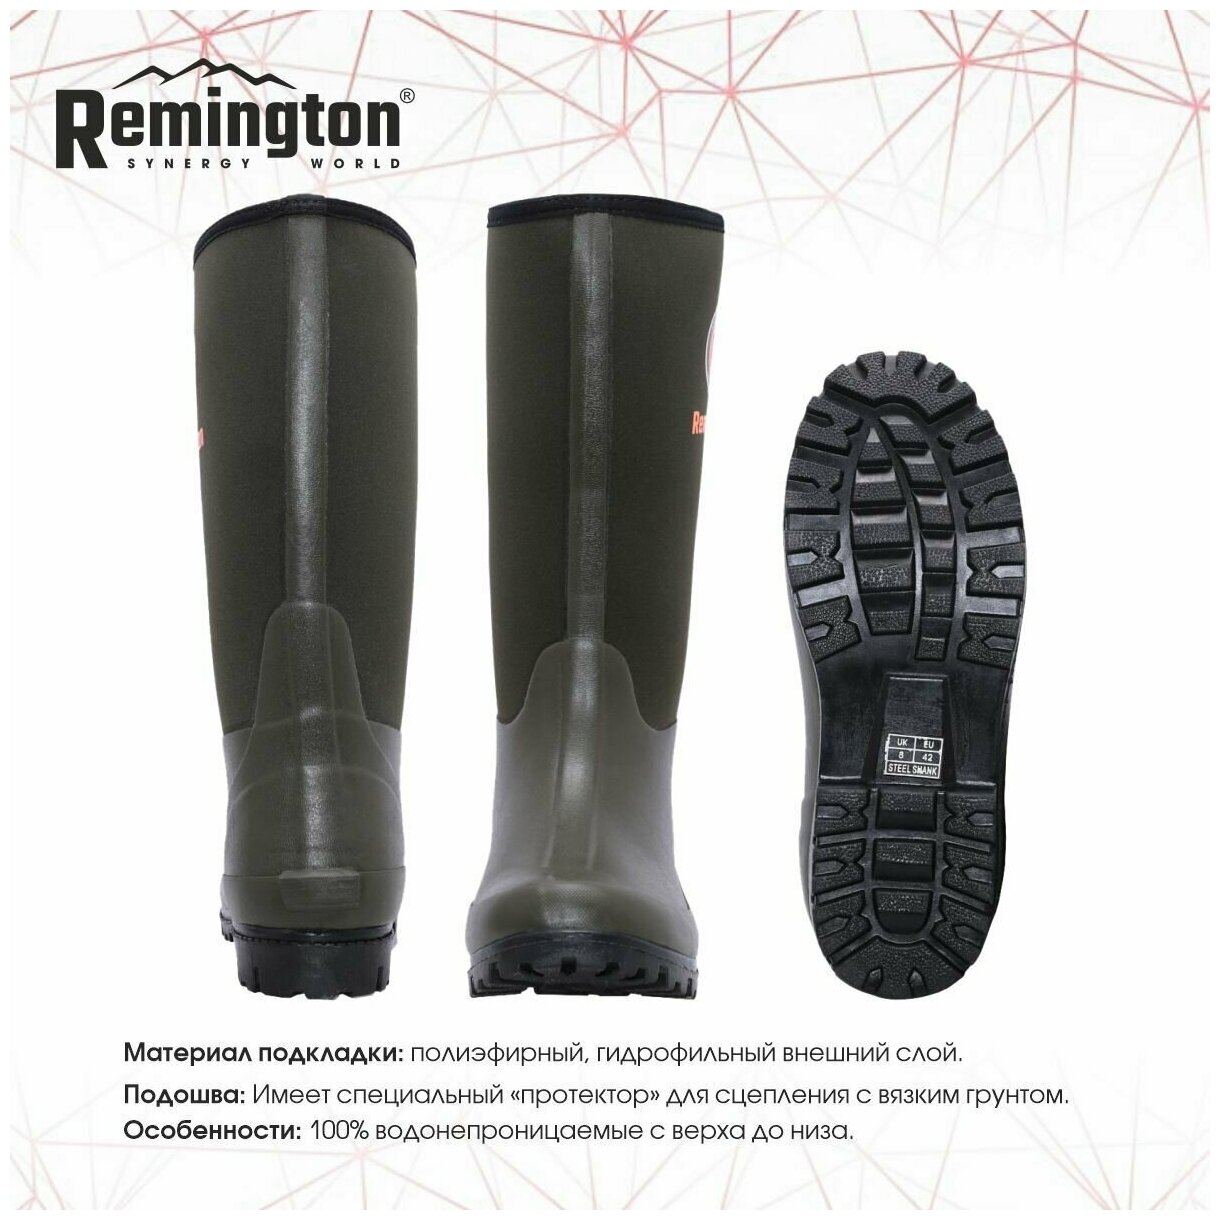 Сапоги Remington Men Tall Rubber Boots, цвет: зеленый р. 44 RM3330-306